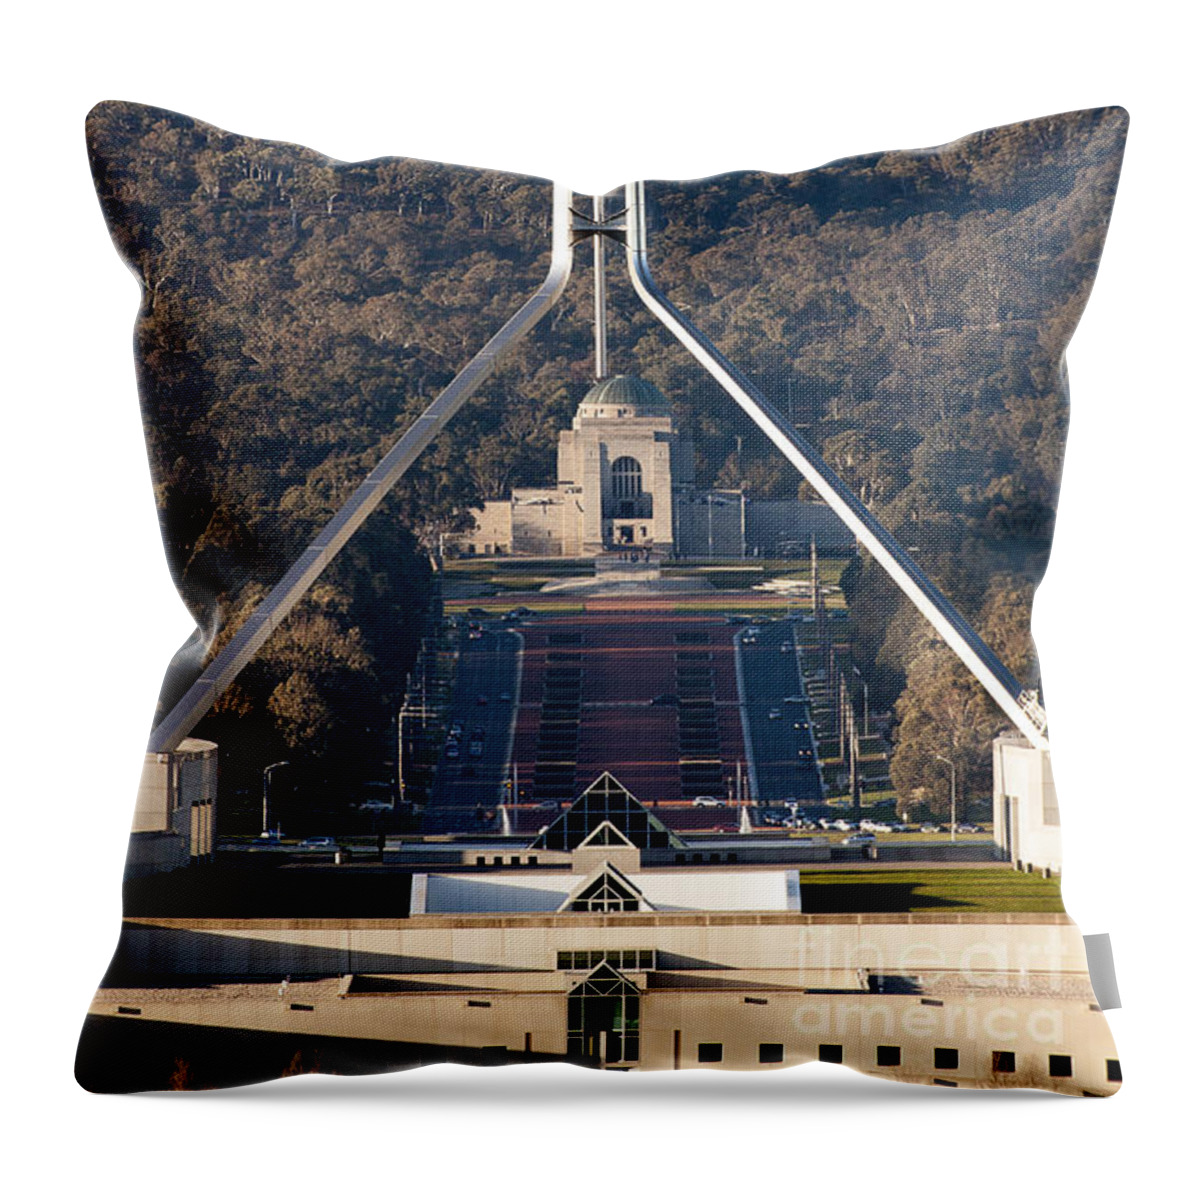 Australia Throw Pillow featuring the photograph Parliament and war memorial australia by Steven Ralser